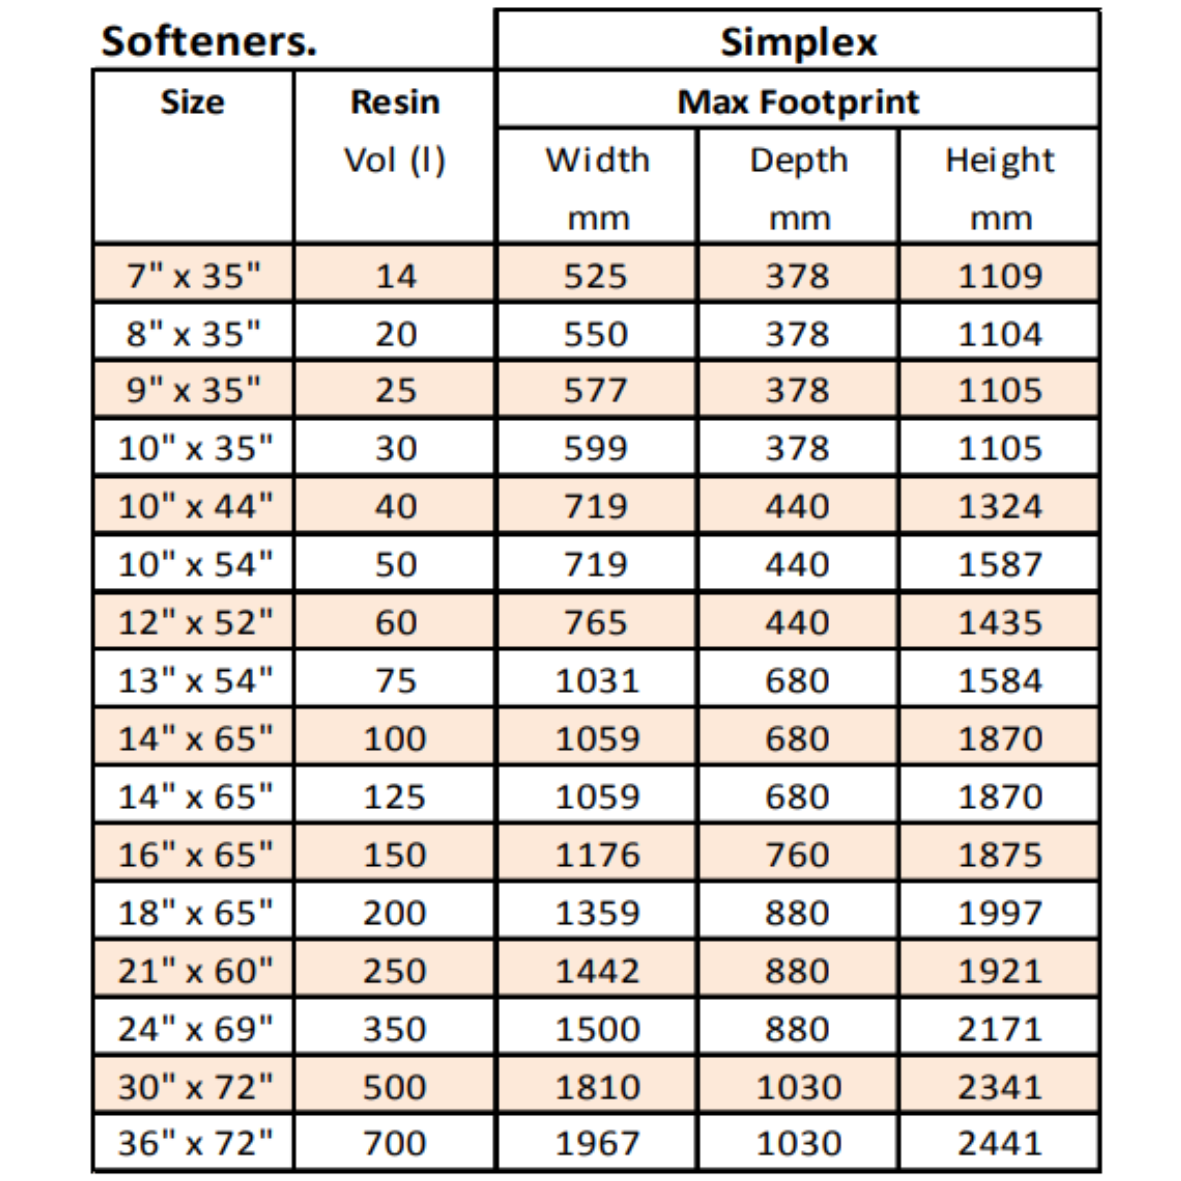 24" x 69", 350L, Simplex Water Softener, Autotrol 298 Time Controller, 14m³/h